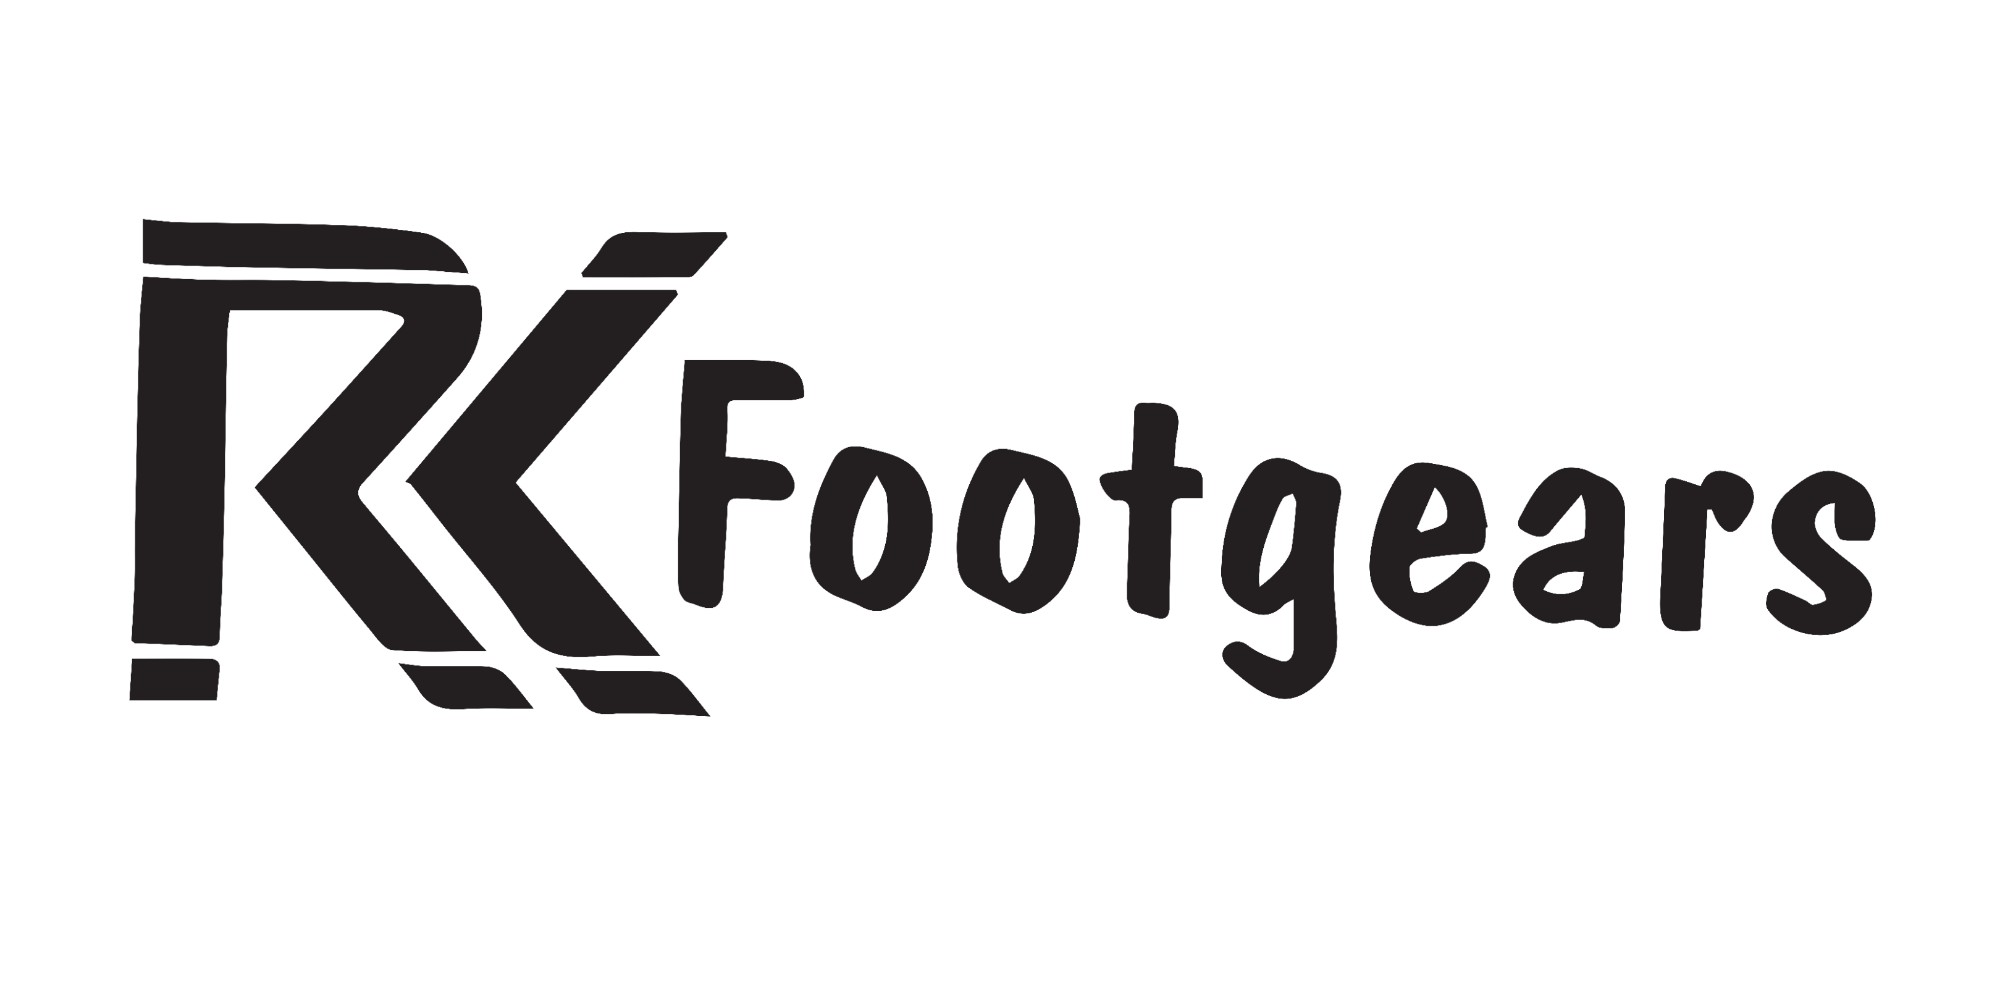 RK Footgears